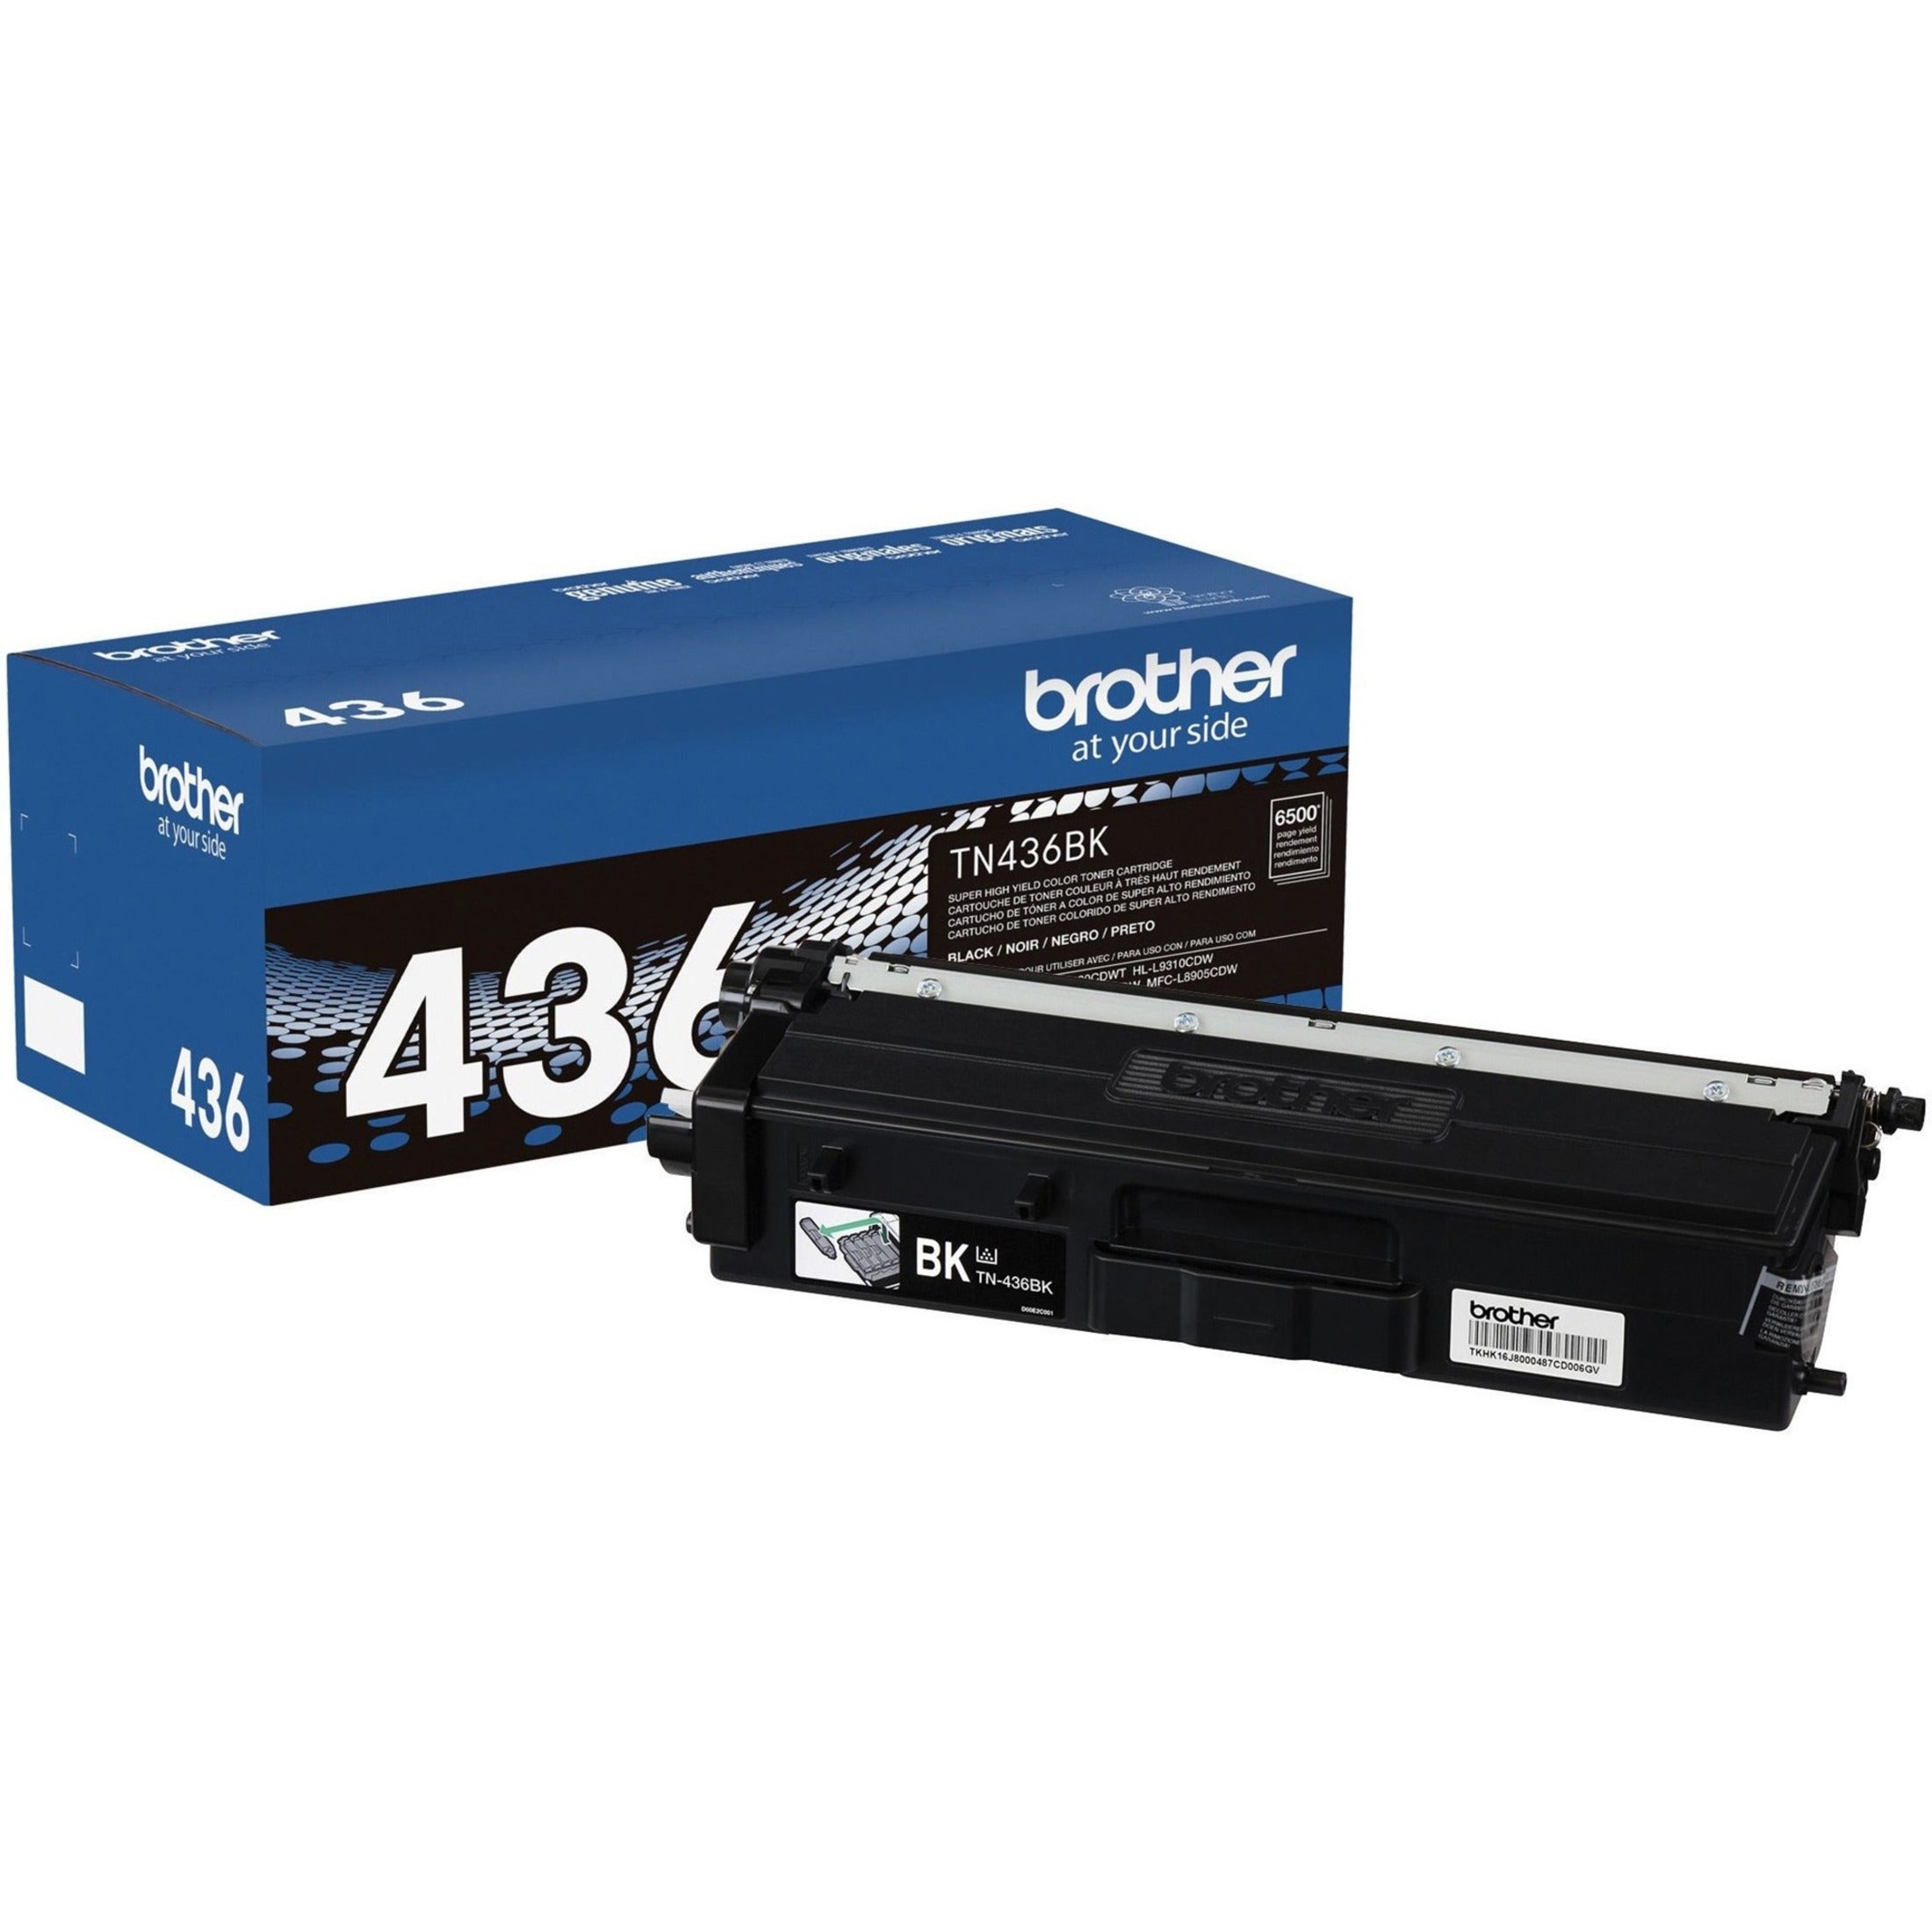 Brother TN436BK Toner Cartridge - Black, Original Laser Toner Cartridge - 6500 Pages